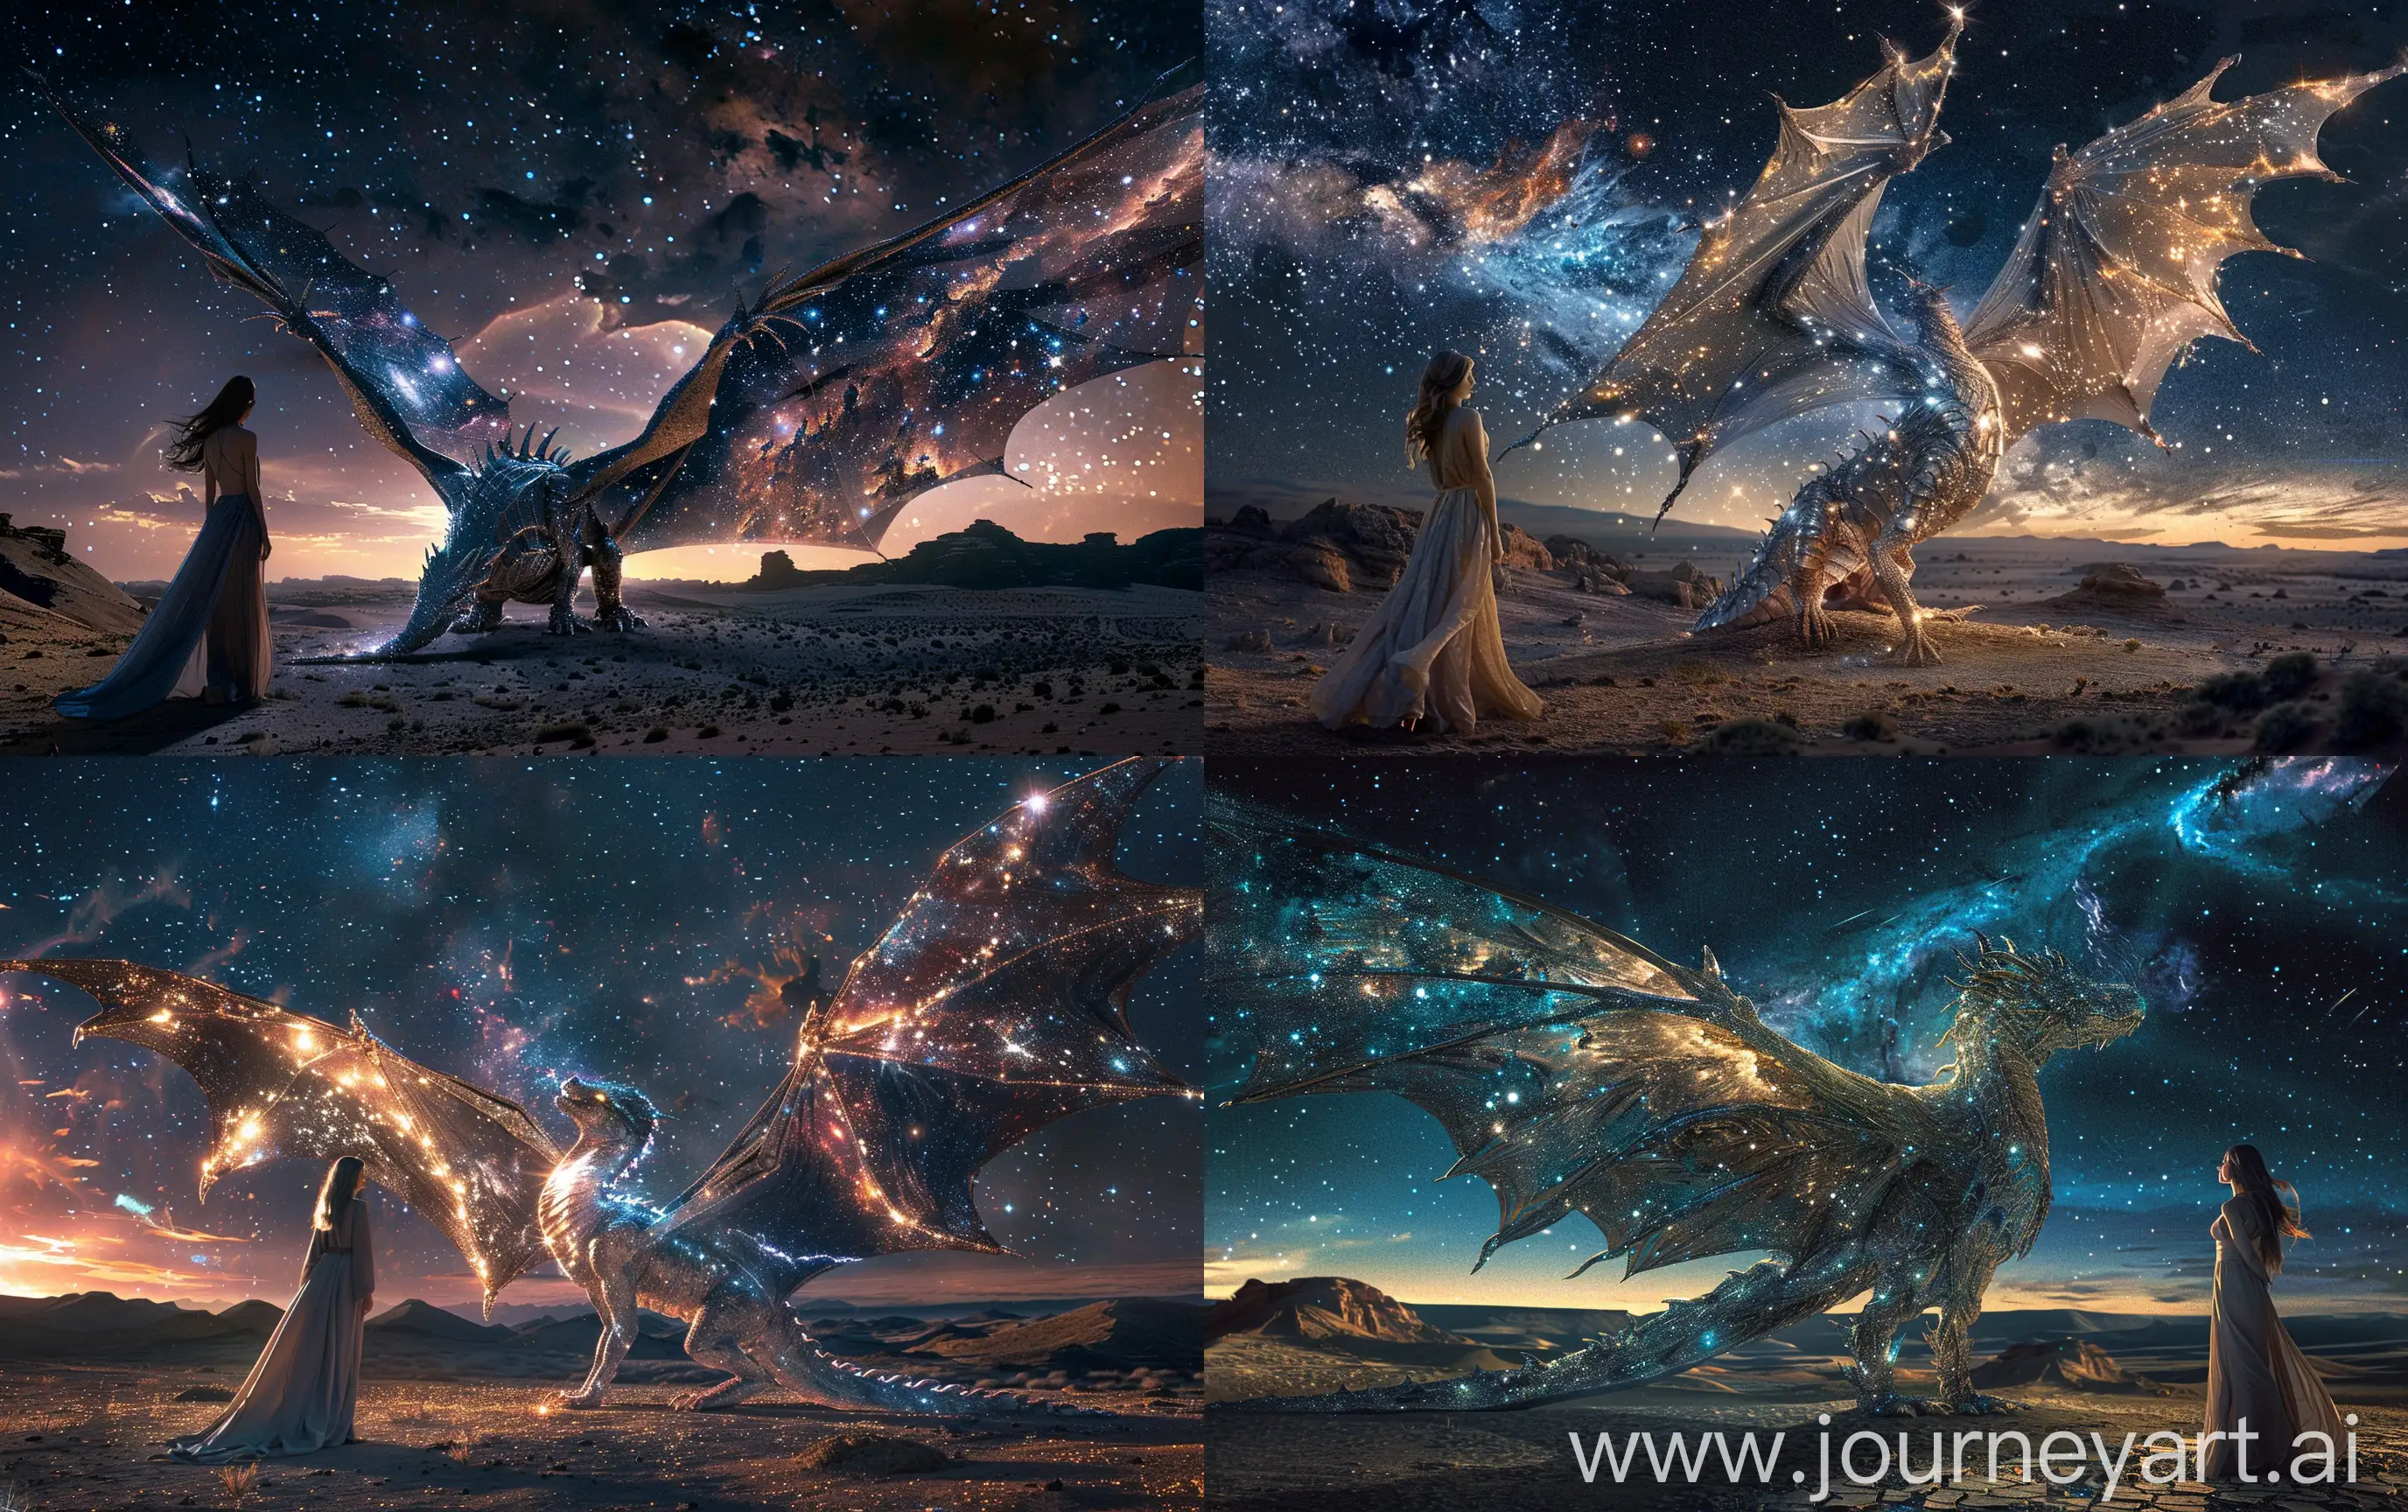 Majestic-Nebula-Dragon-and-Enigmatic-Beauty-in-Night-Desert-Landscape